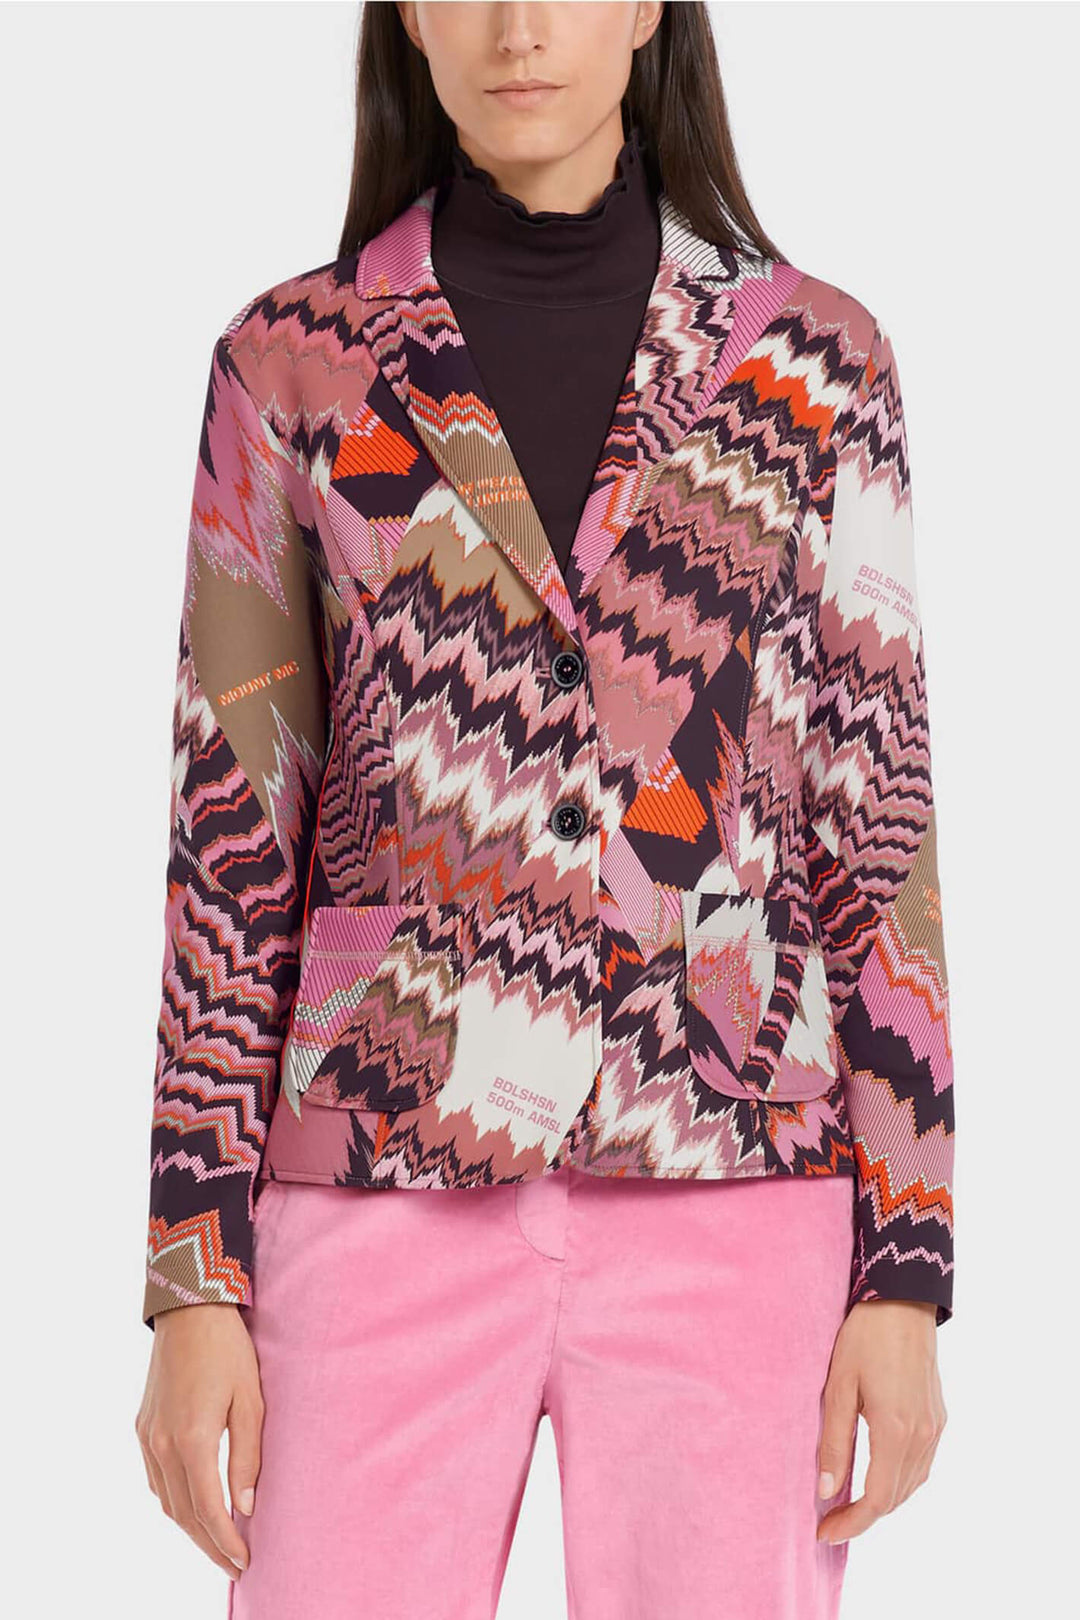 Marc Cain Sports VS 34.08 J44 254 Pink Bright Orchid Print Jacket - Olivia Grace Fashion